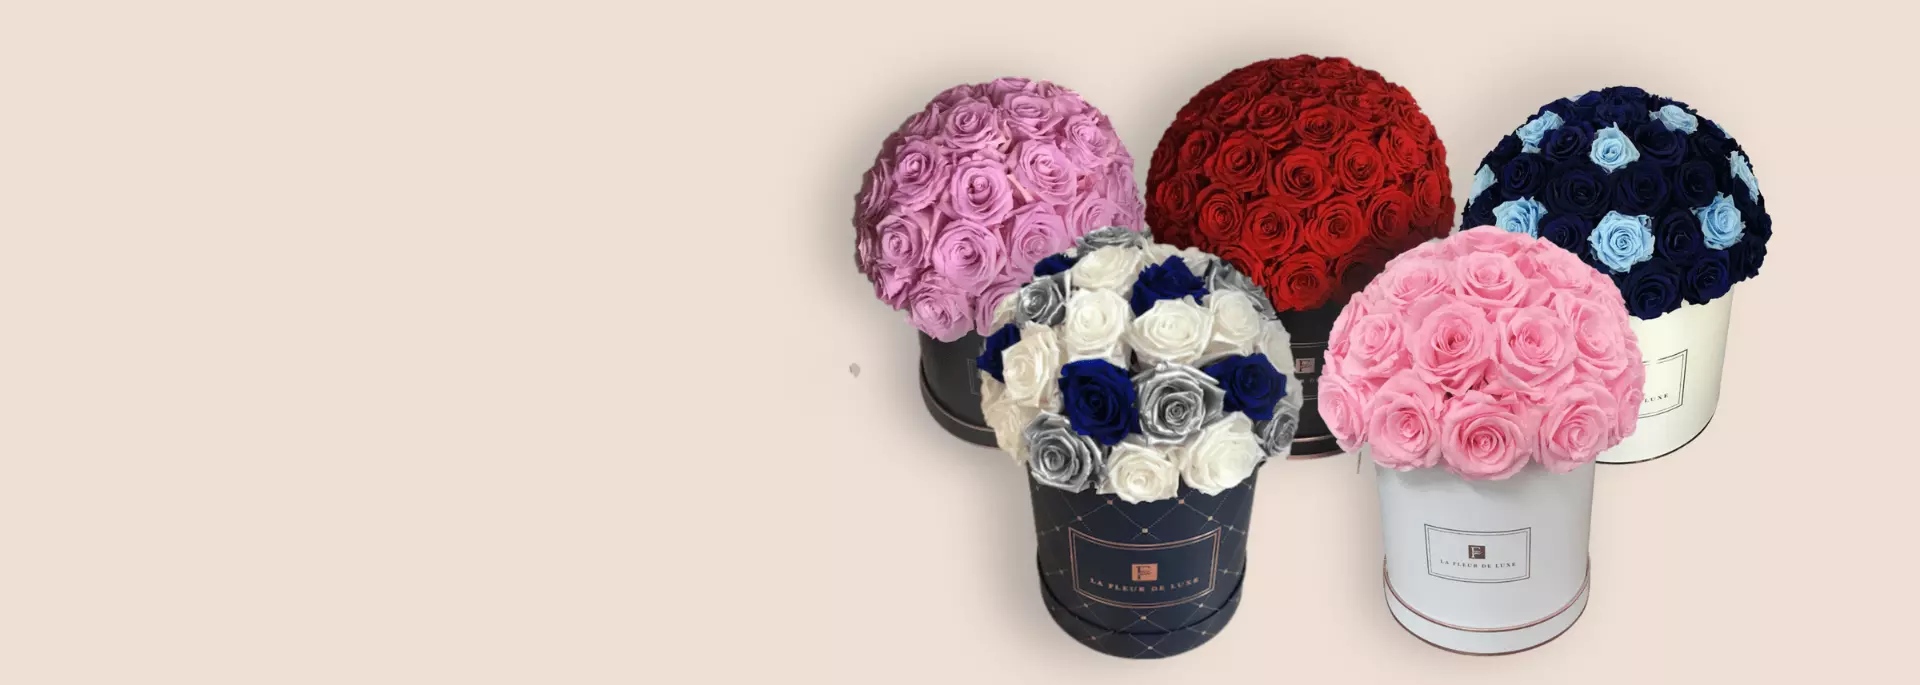 Roses in a Box - Luxury Flower Arrangements